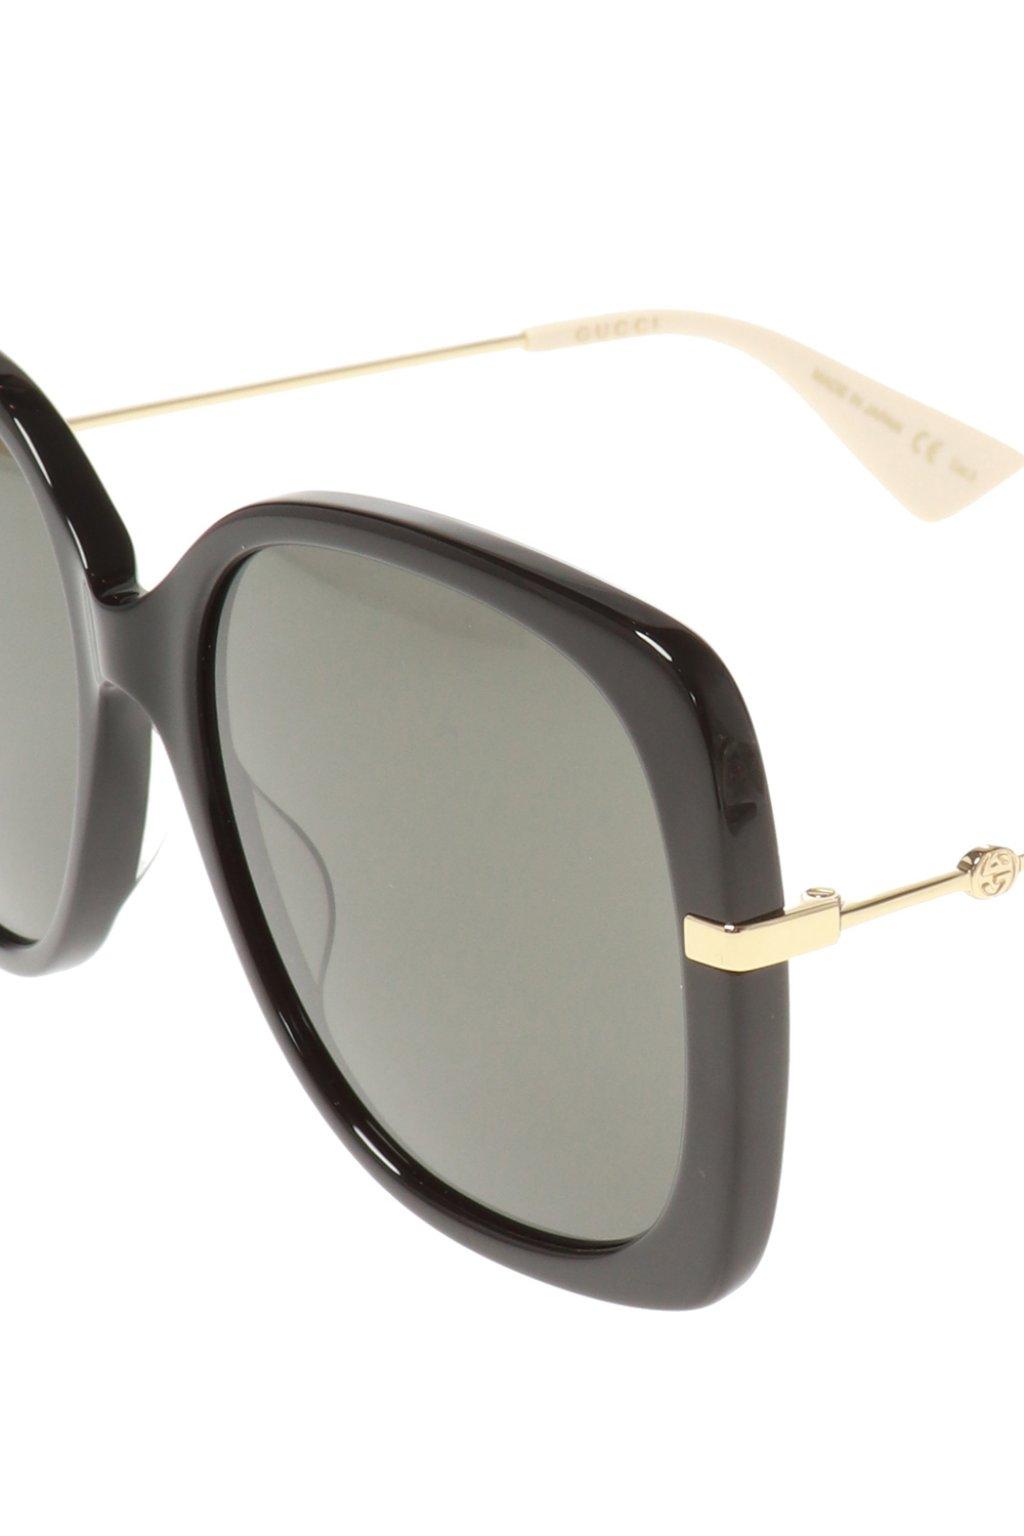 Gucci Bee Motif Sunglasses in Black Brown (Black) - Lyst